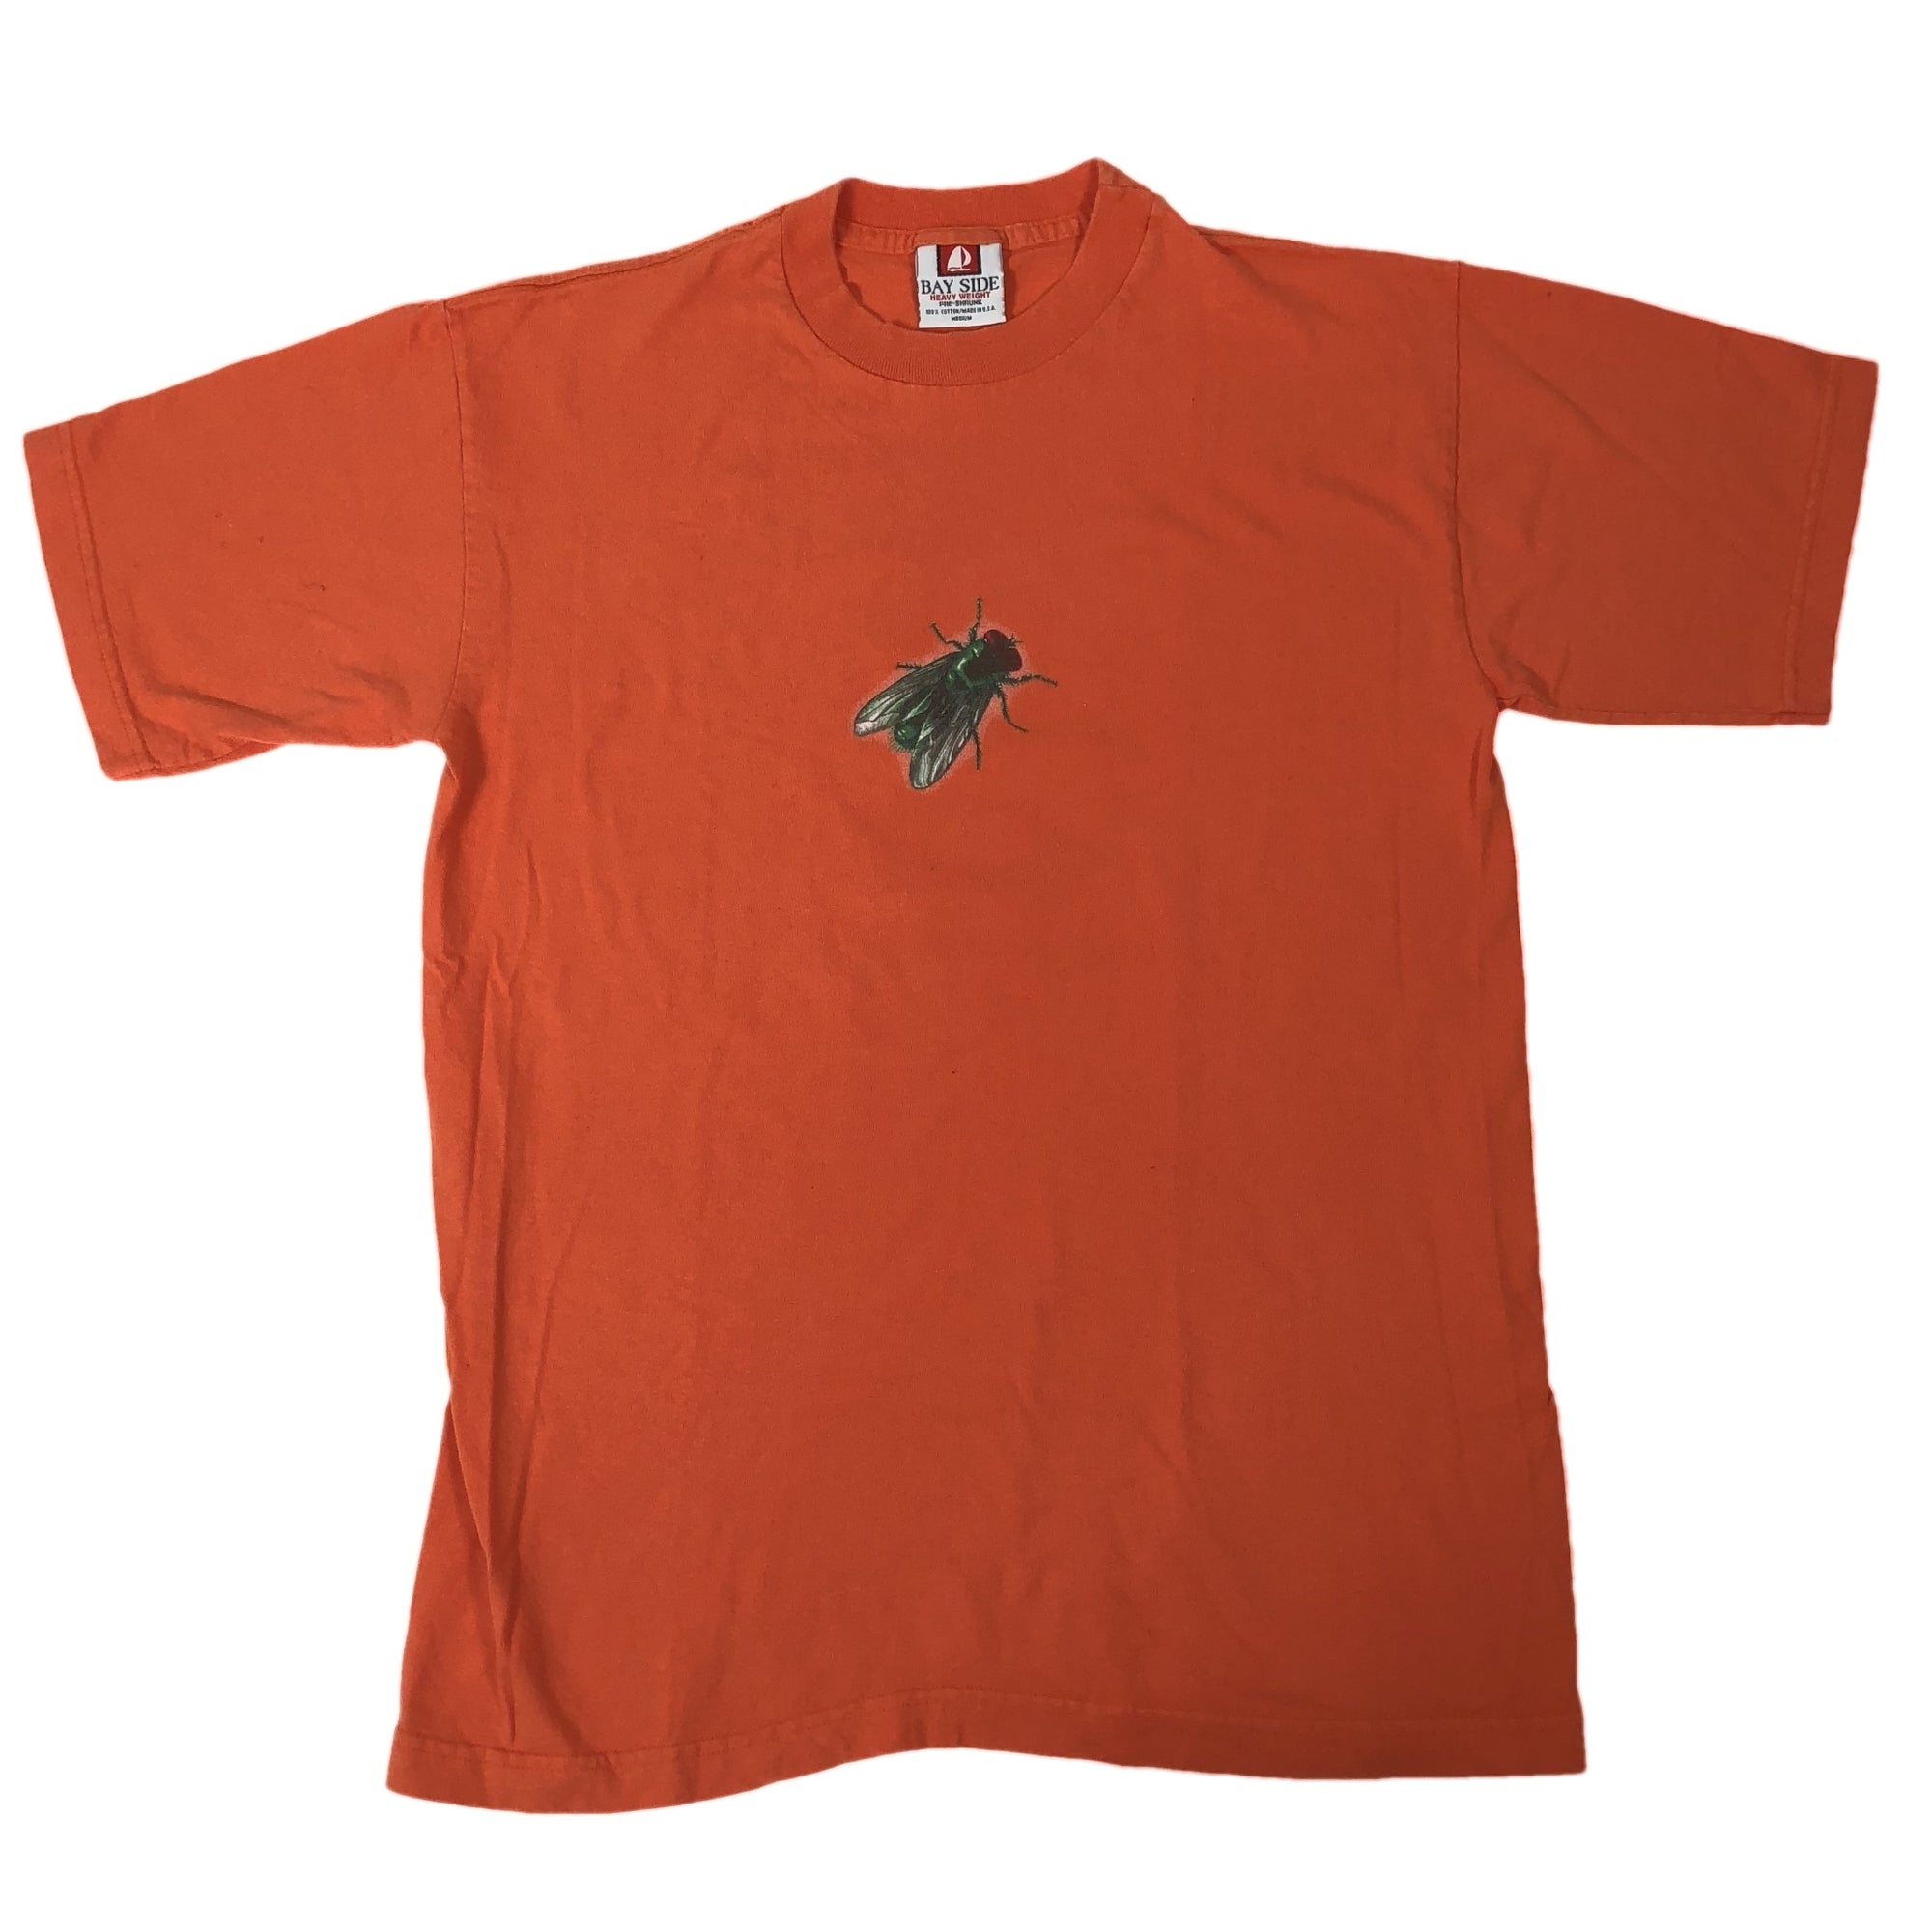 Vintage No Doubt "Fly Tragic Kingdom" T-Shirt - jointcustodydc